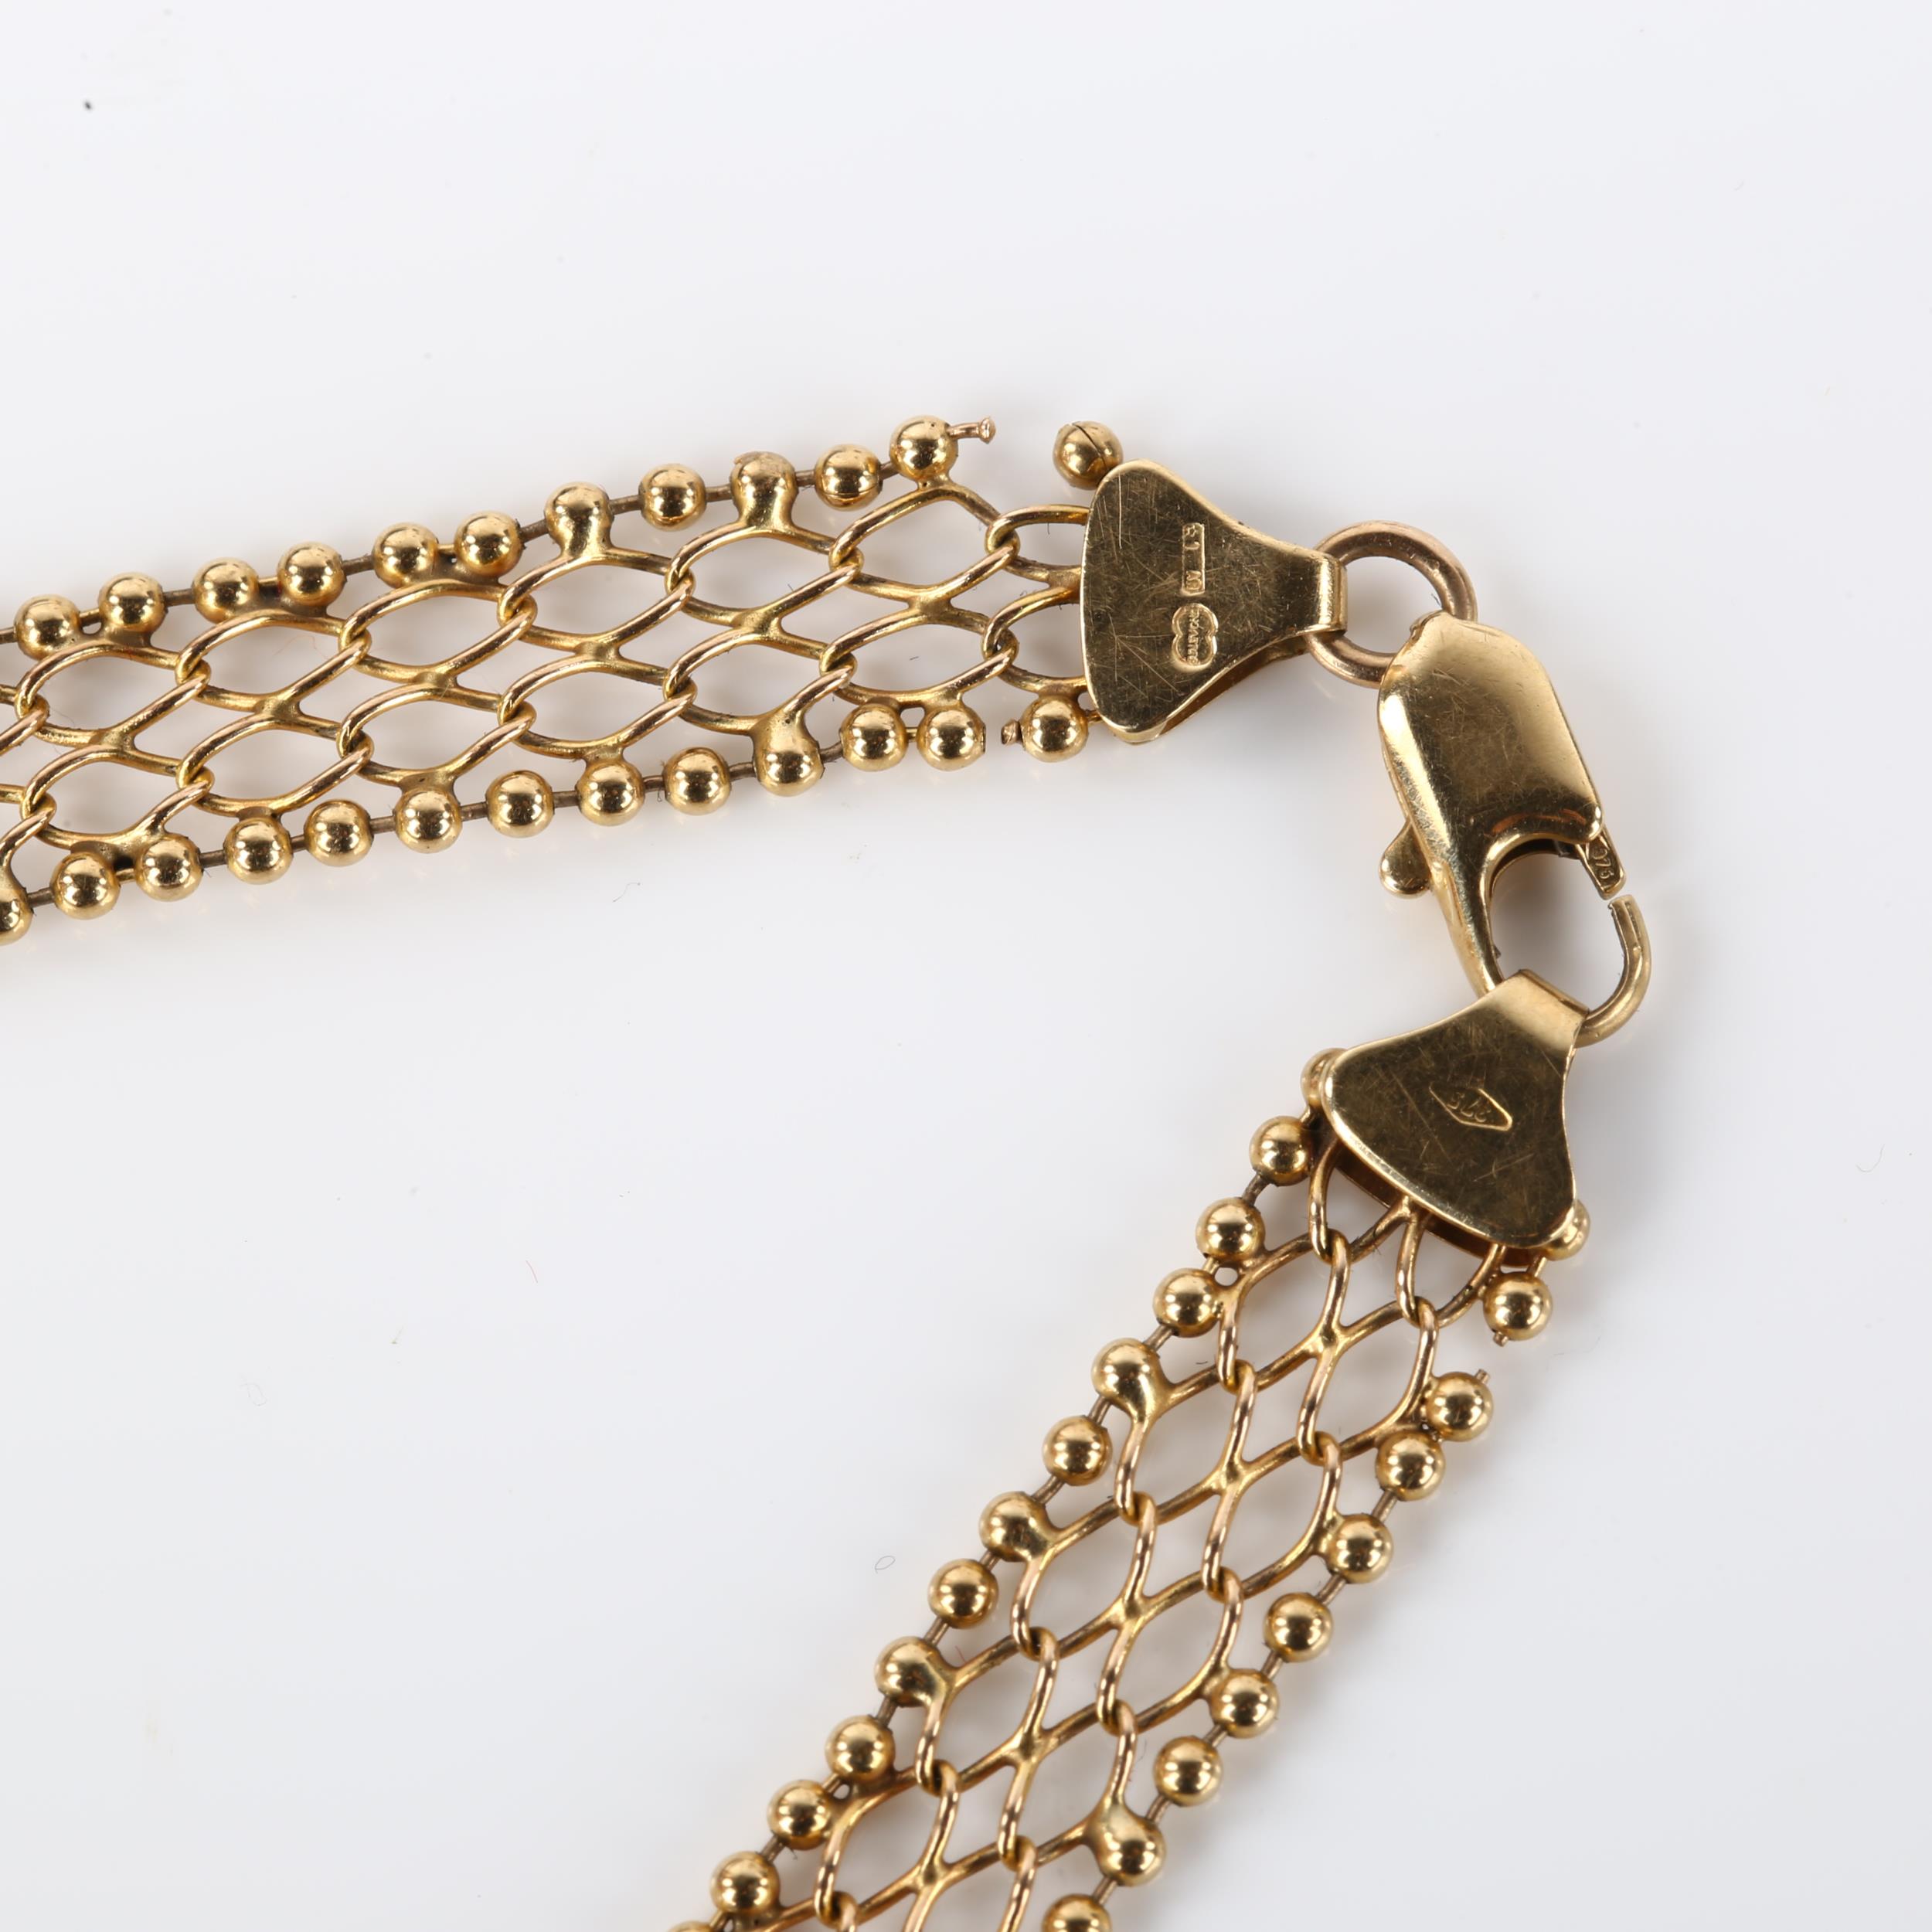 UNOAERRE - a 9ct gold lattice bracelet, length 19cm, 5.7g No damage or repairs, no broken links, - Image 3 of 4